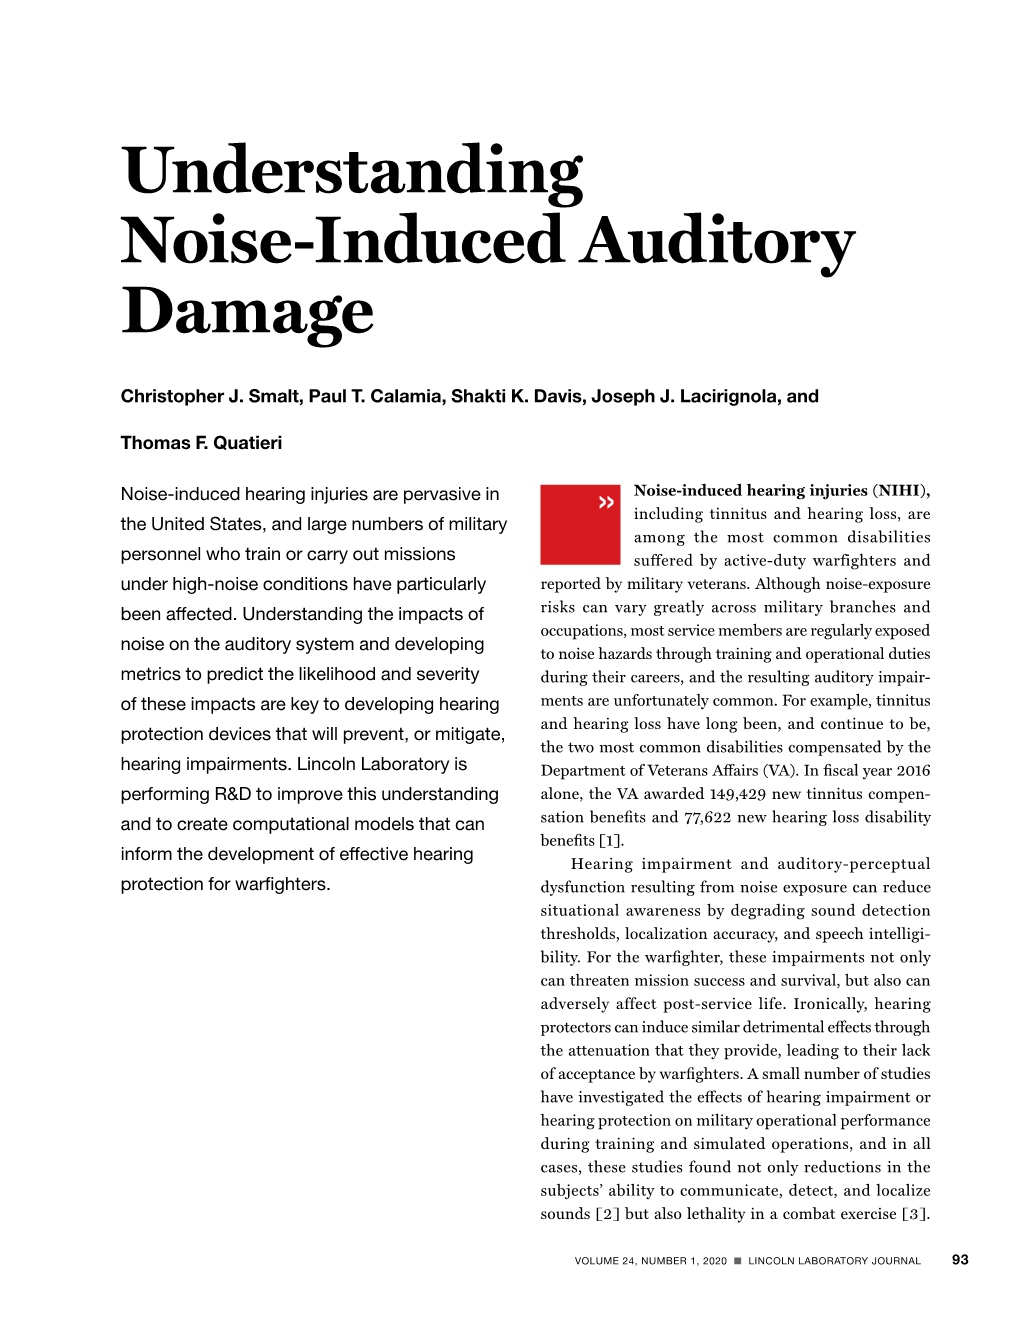 Understanding Noise-Induced Auditory Damage